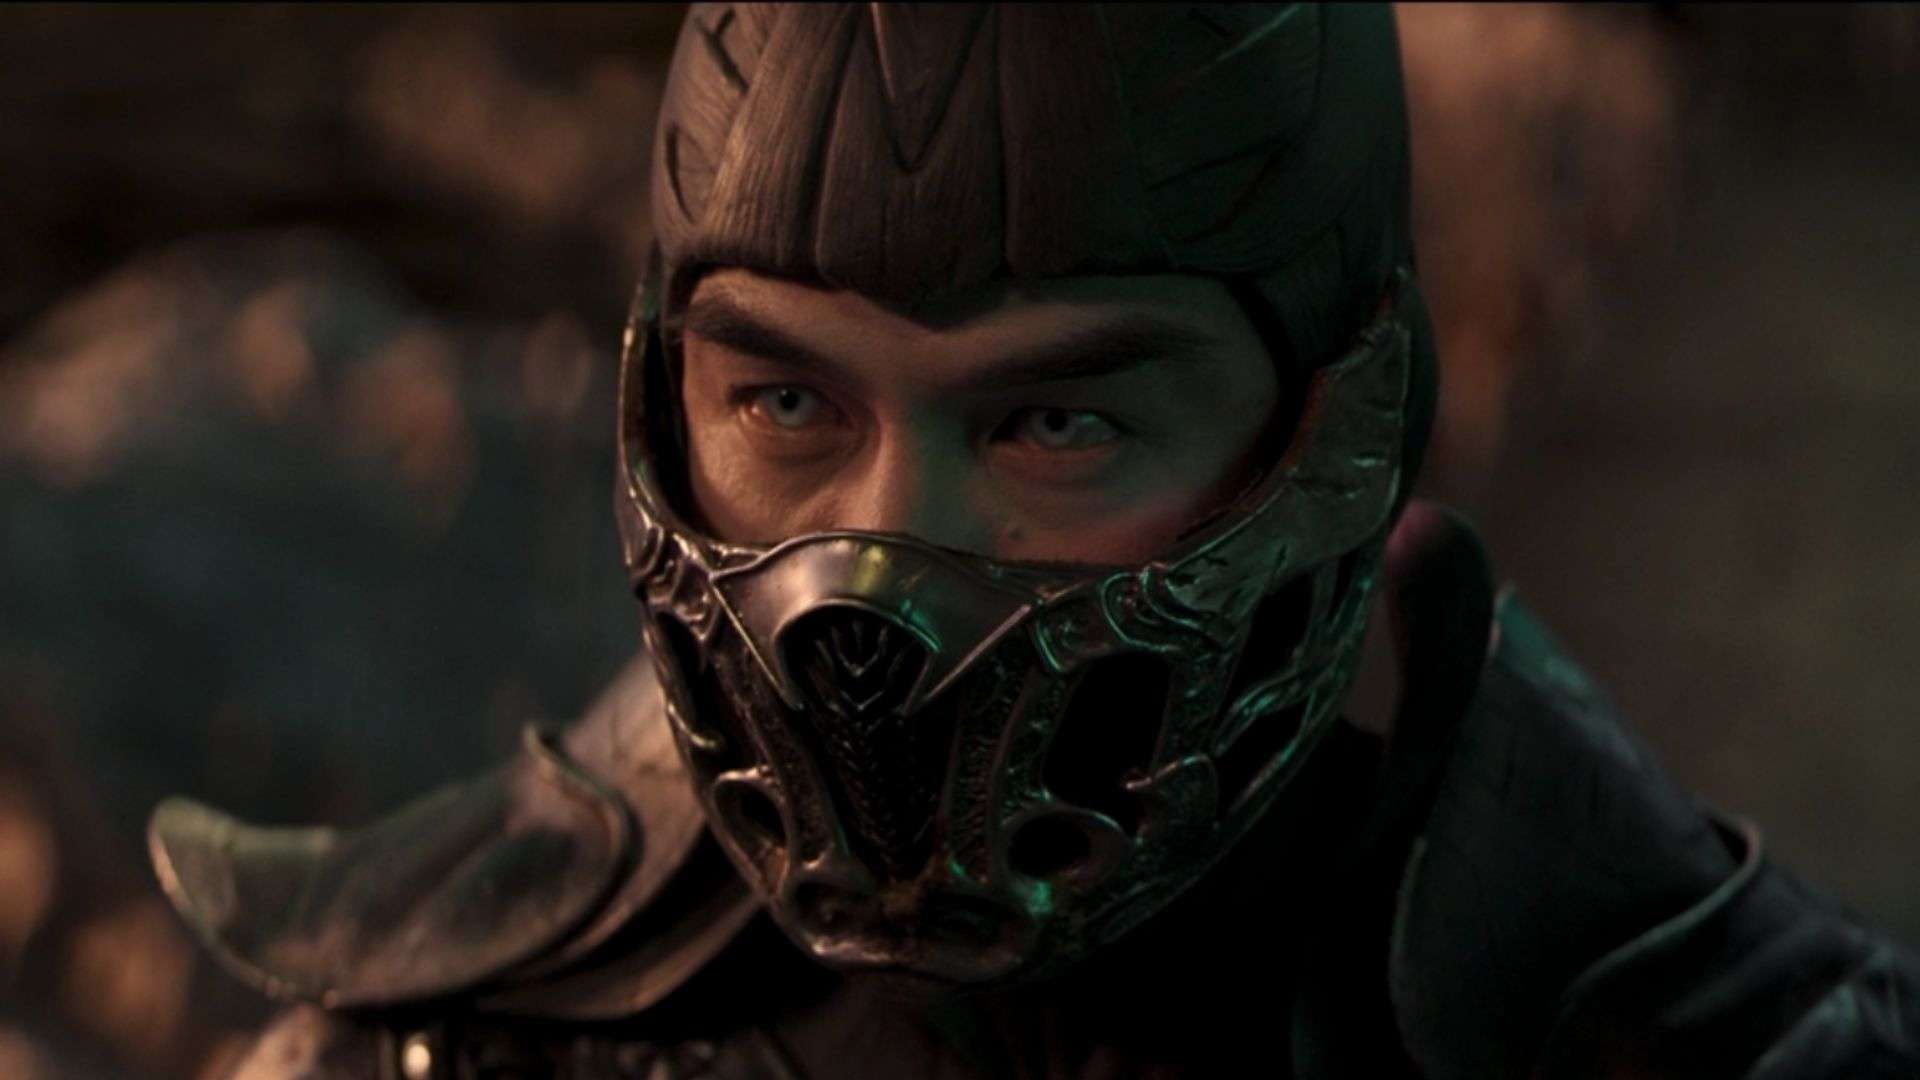 First Image of Baraka in 'Mortal Kombat' Web Series? [Updated]